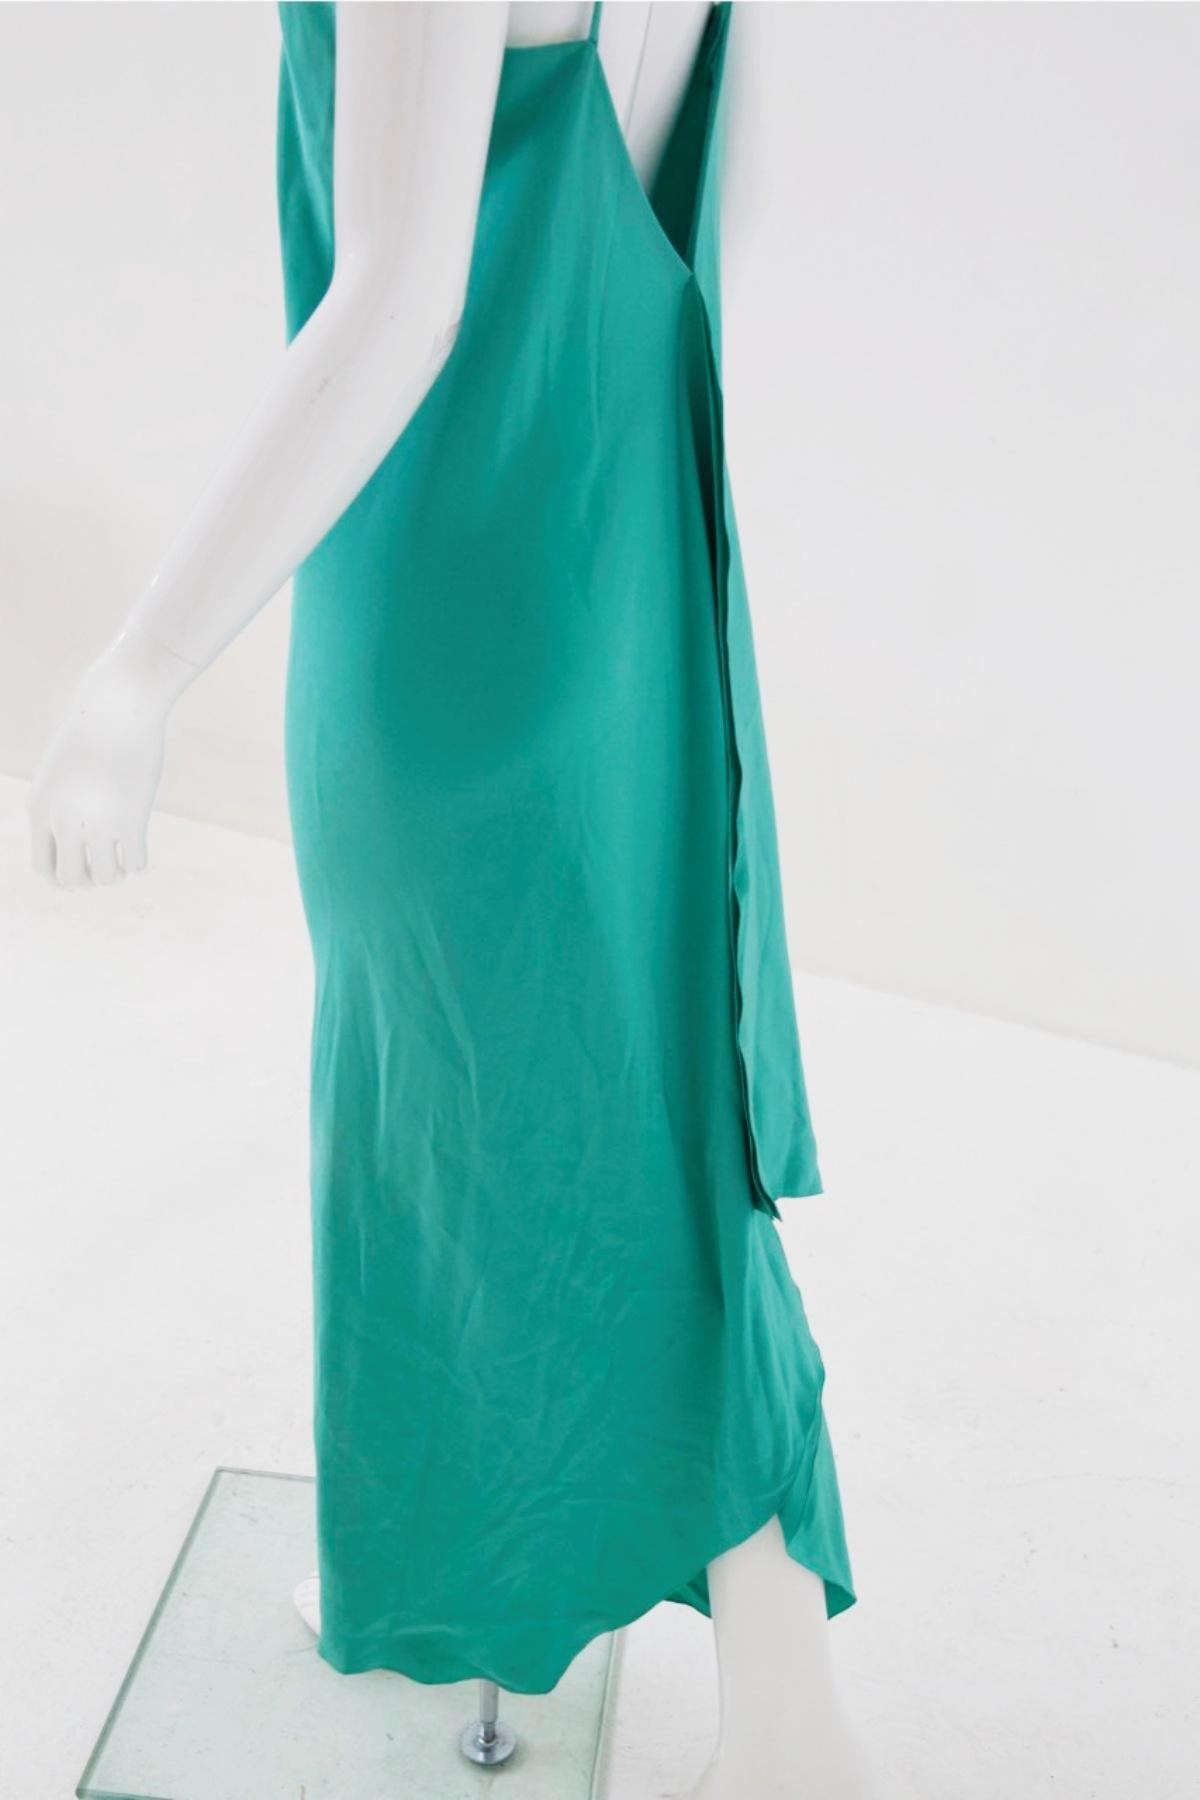 Pierre Cardin Vintage Teal Long Dress For Sale 4